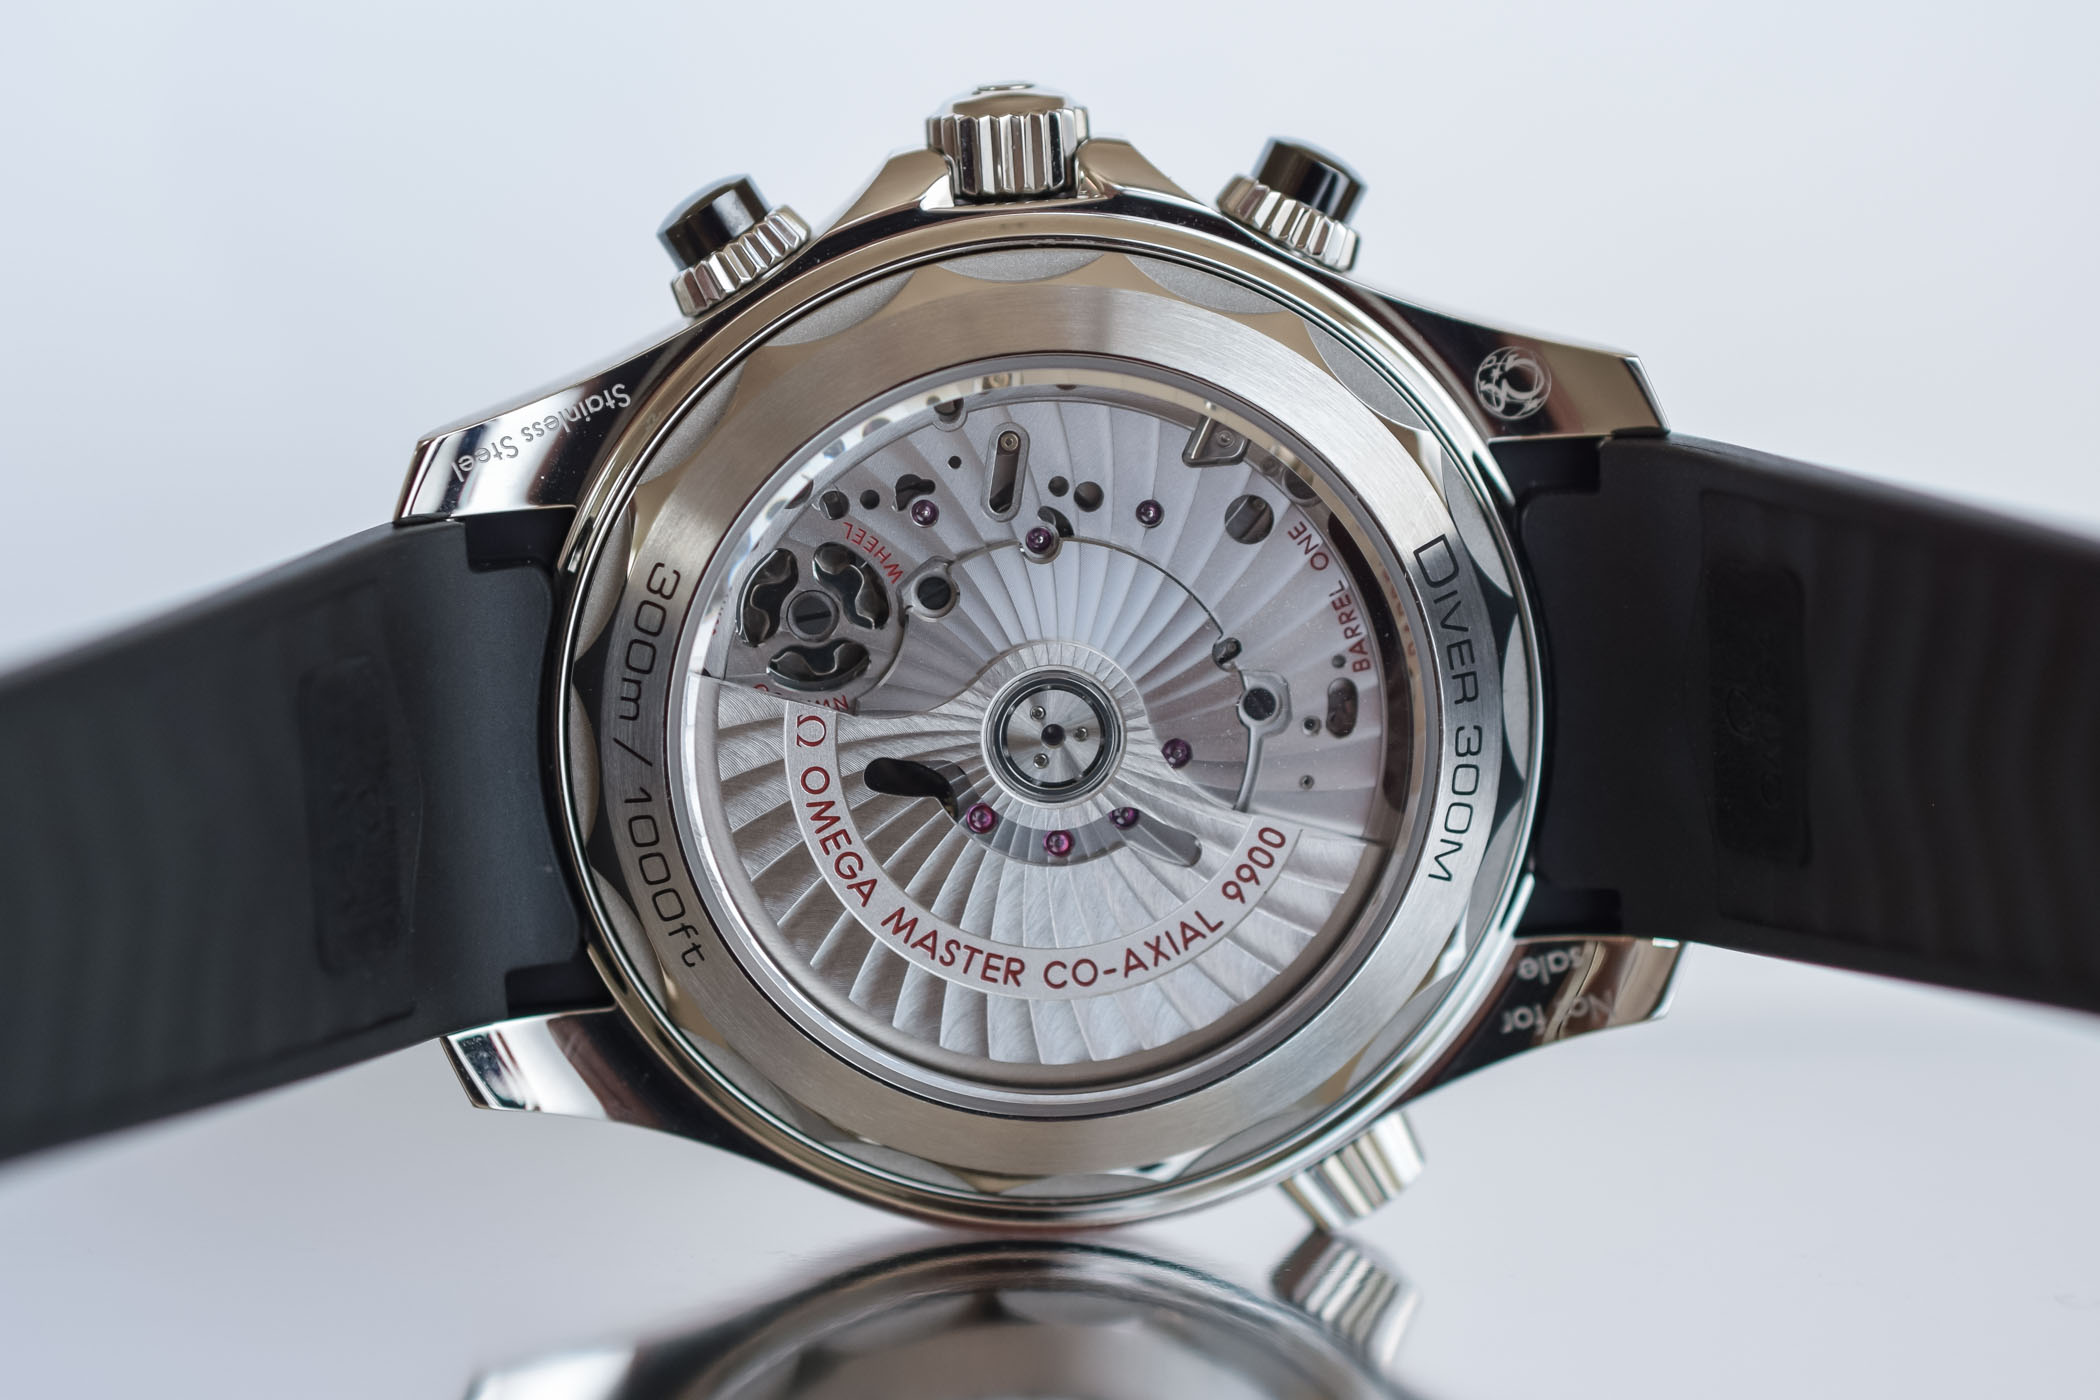 Omega Seamaster Diver 300M Chronograph Master Chronometer - 210.32.44.51.01.001